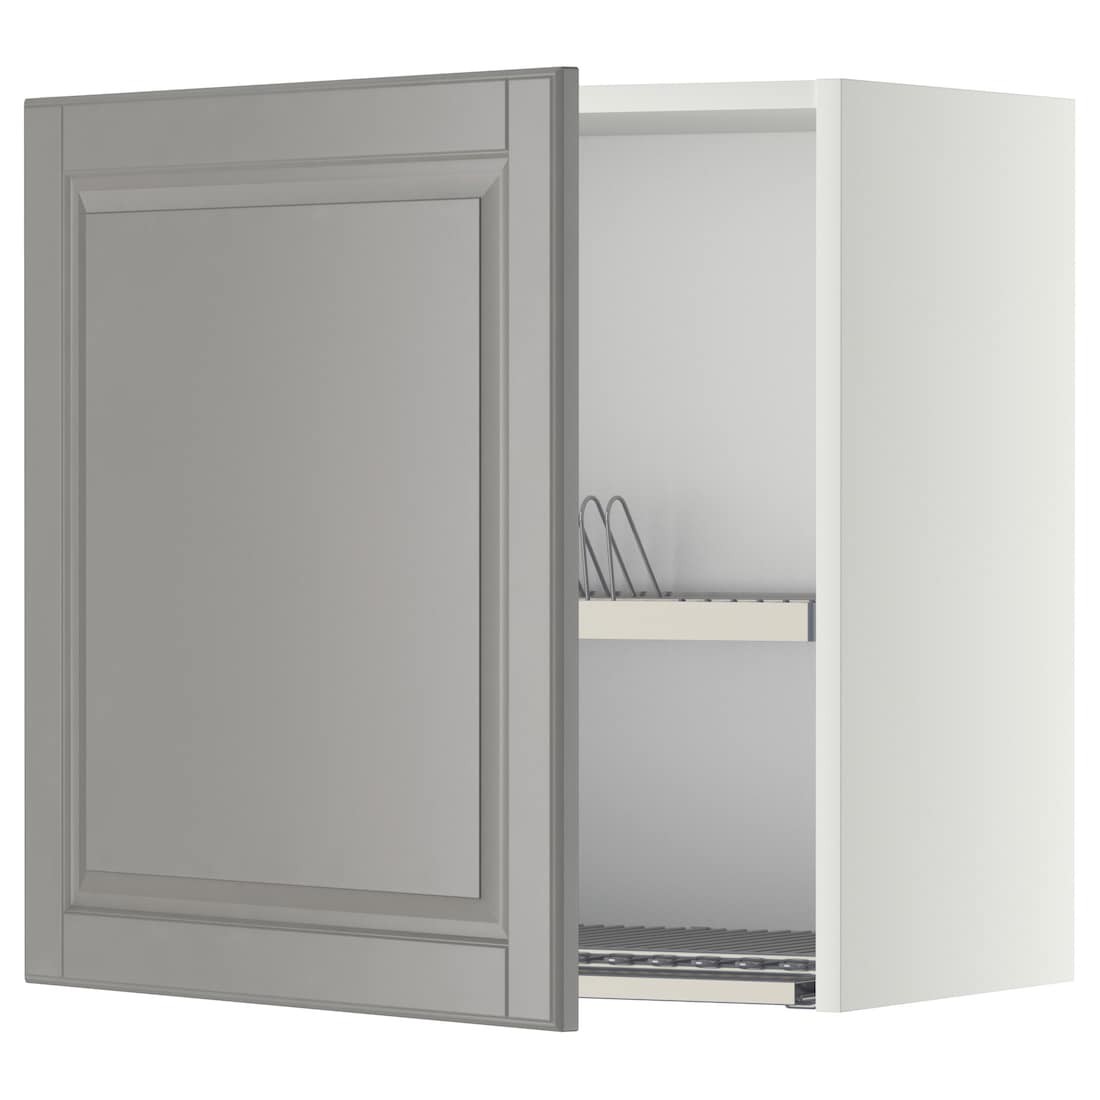 IKEA METOD МЕТОД Навесной шкаф с сушилкой, белый / Bodbyn серый, 60x60 см 09455307 094.553.07